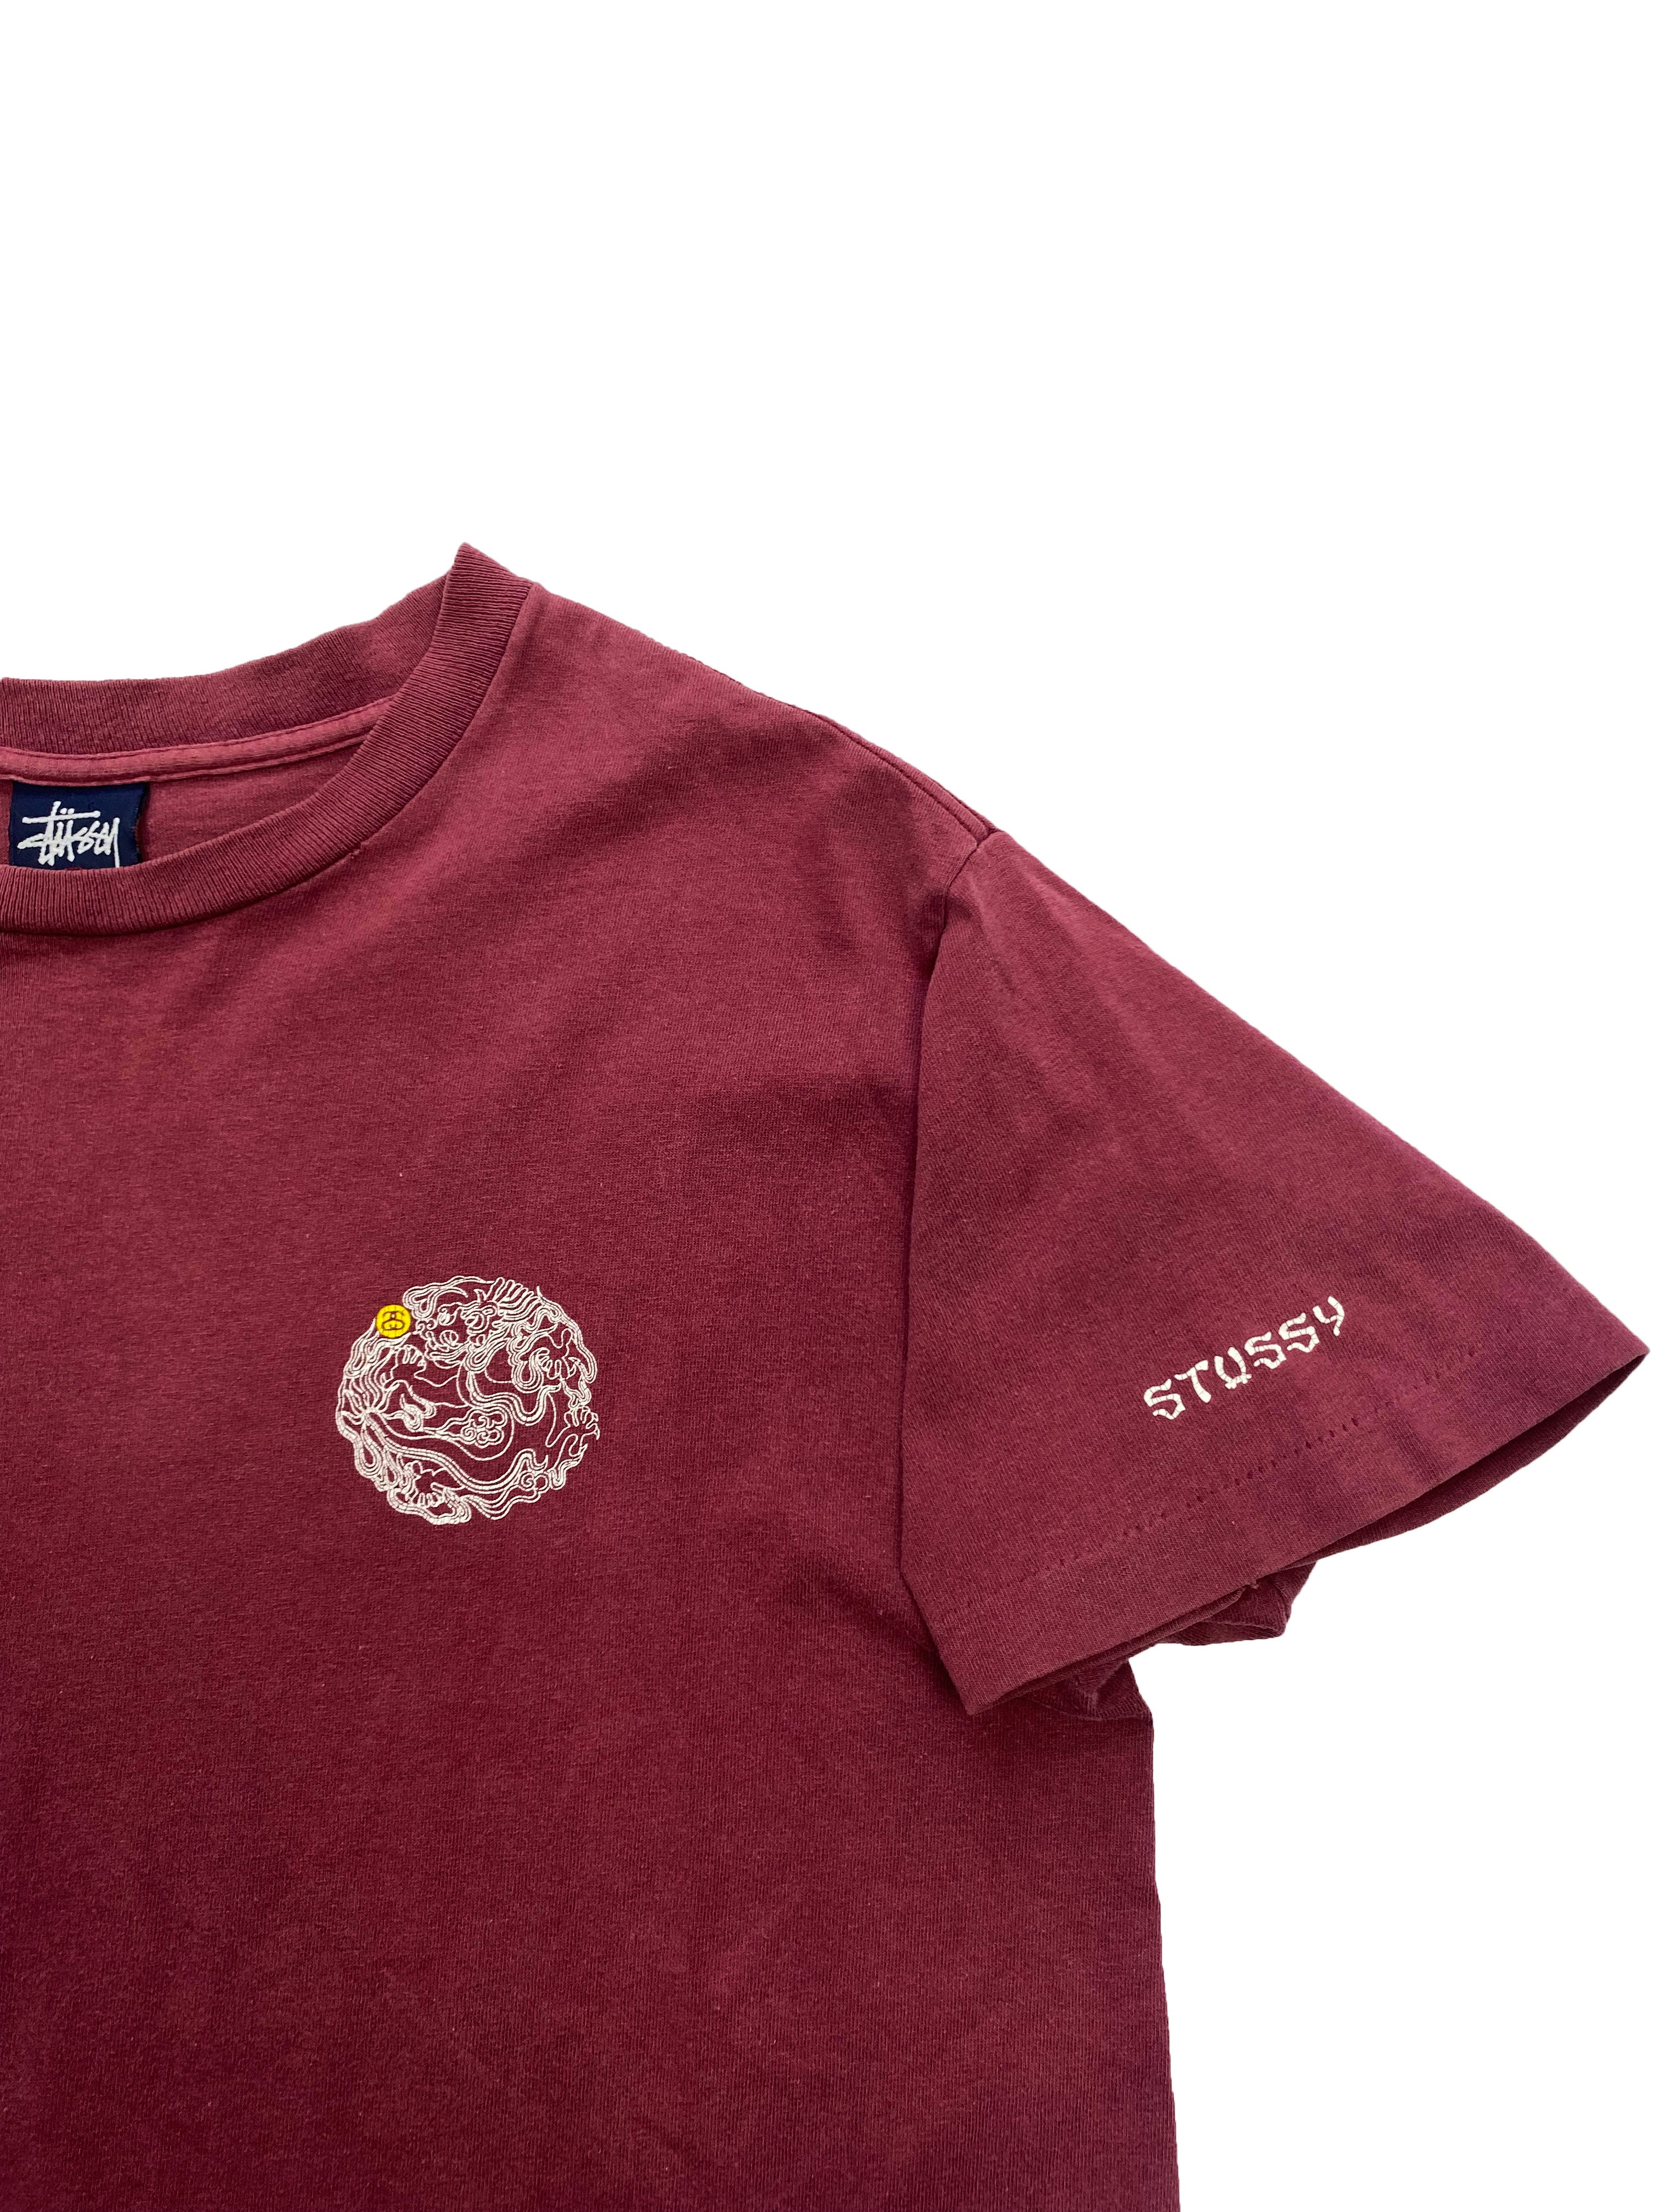 Stussy Dragon Burgundy T-shirt 90's